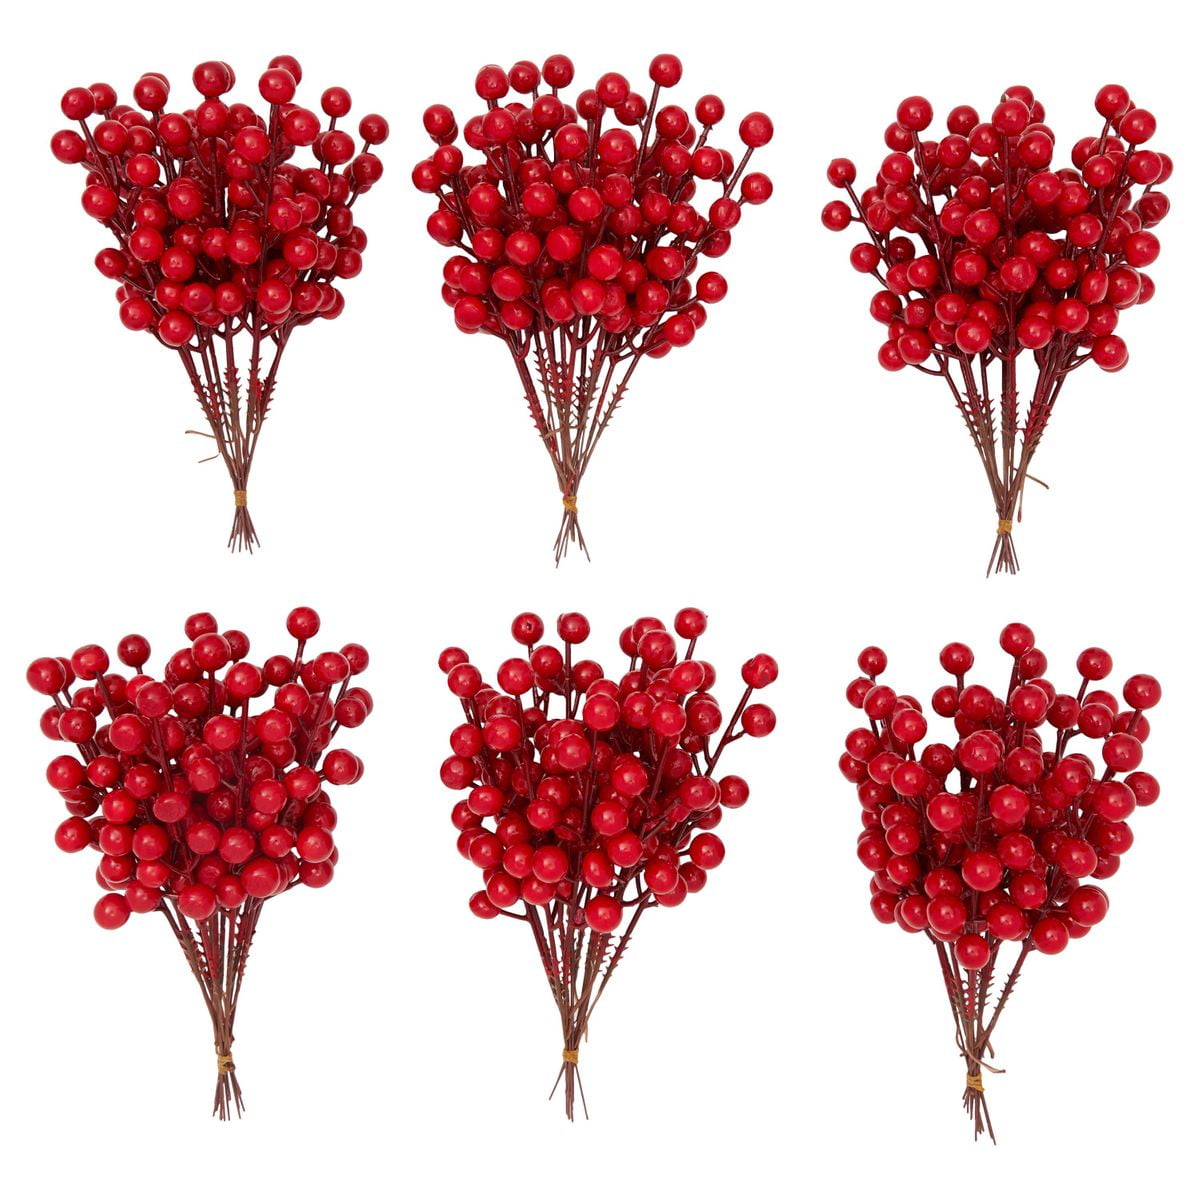 Artificial Red Berry picks x 20 pcs Christmas wreath garland displays 